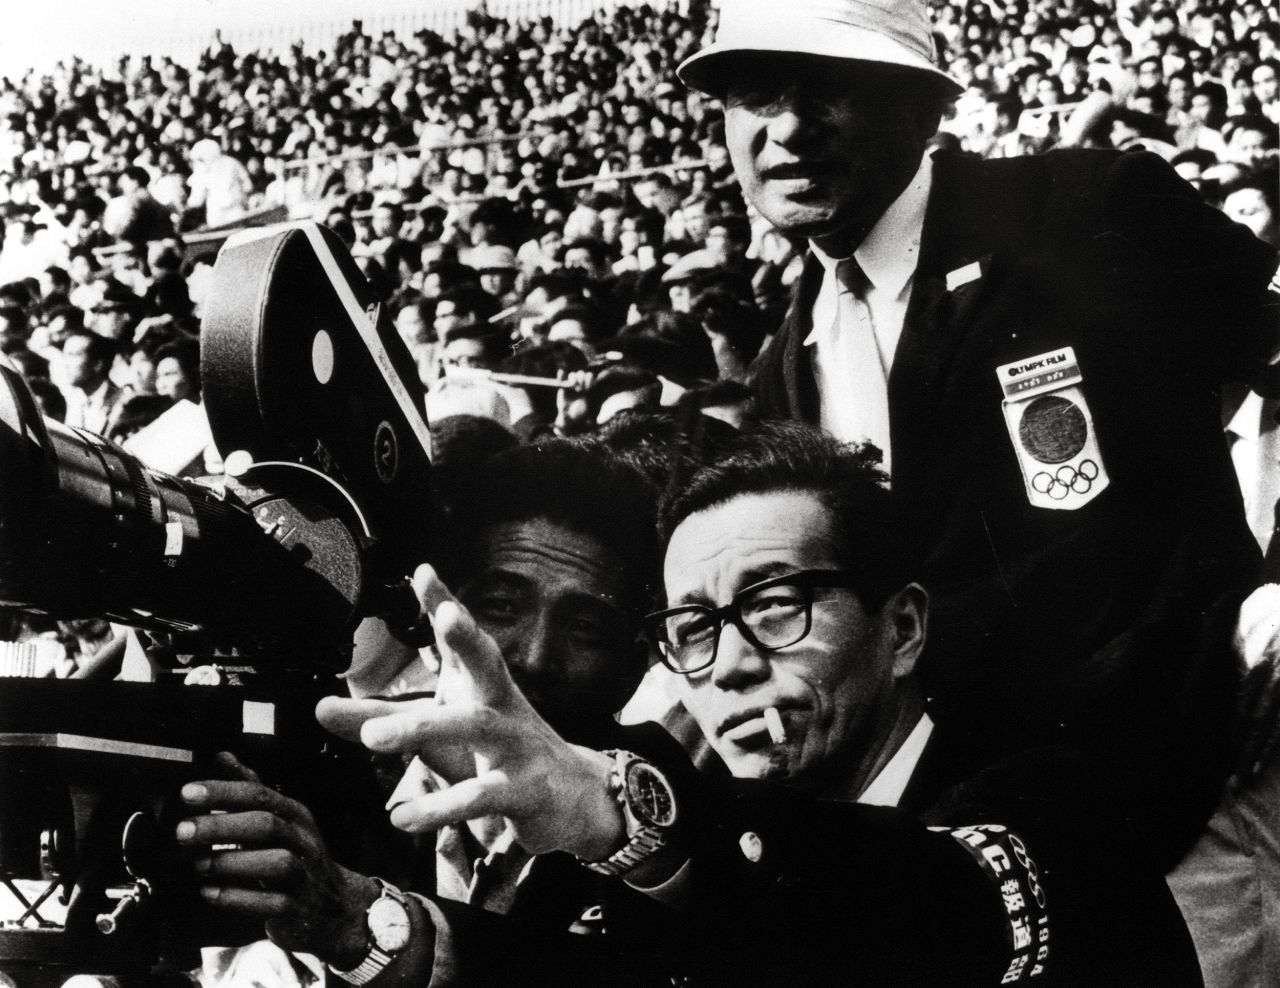 Kon Ichikawa (center) directing a crew at the Tokyo Games of 1964.